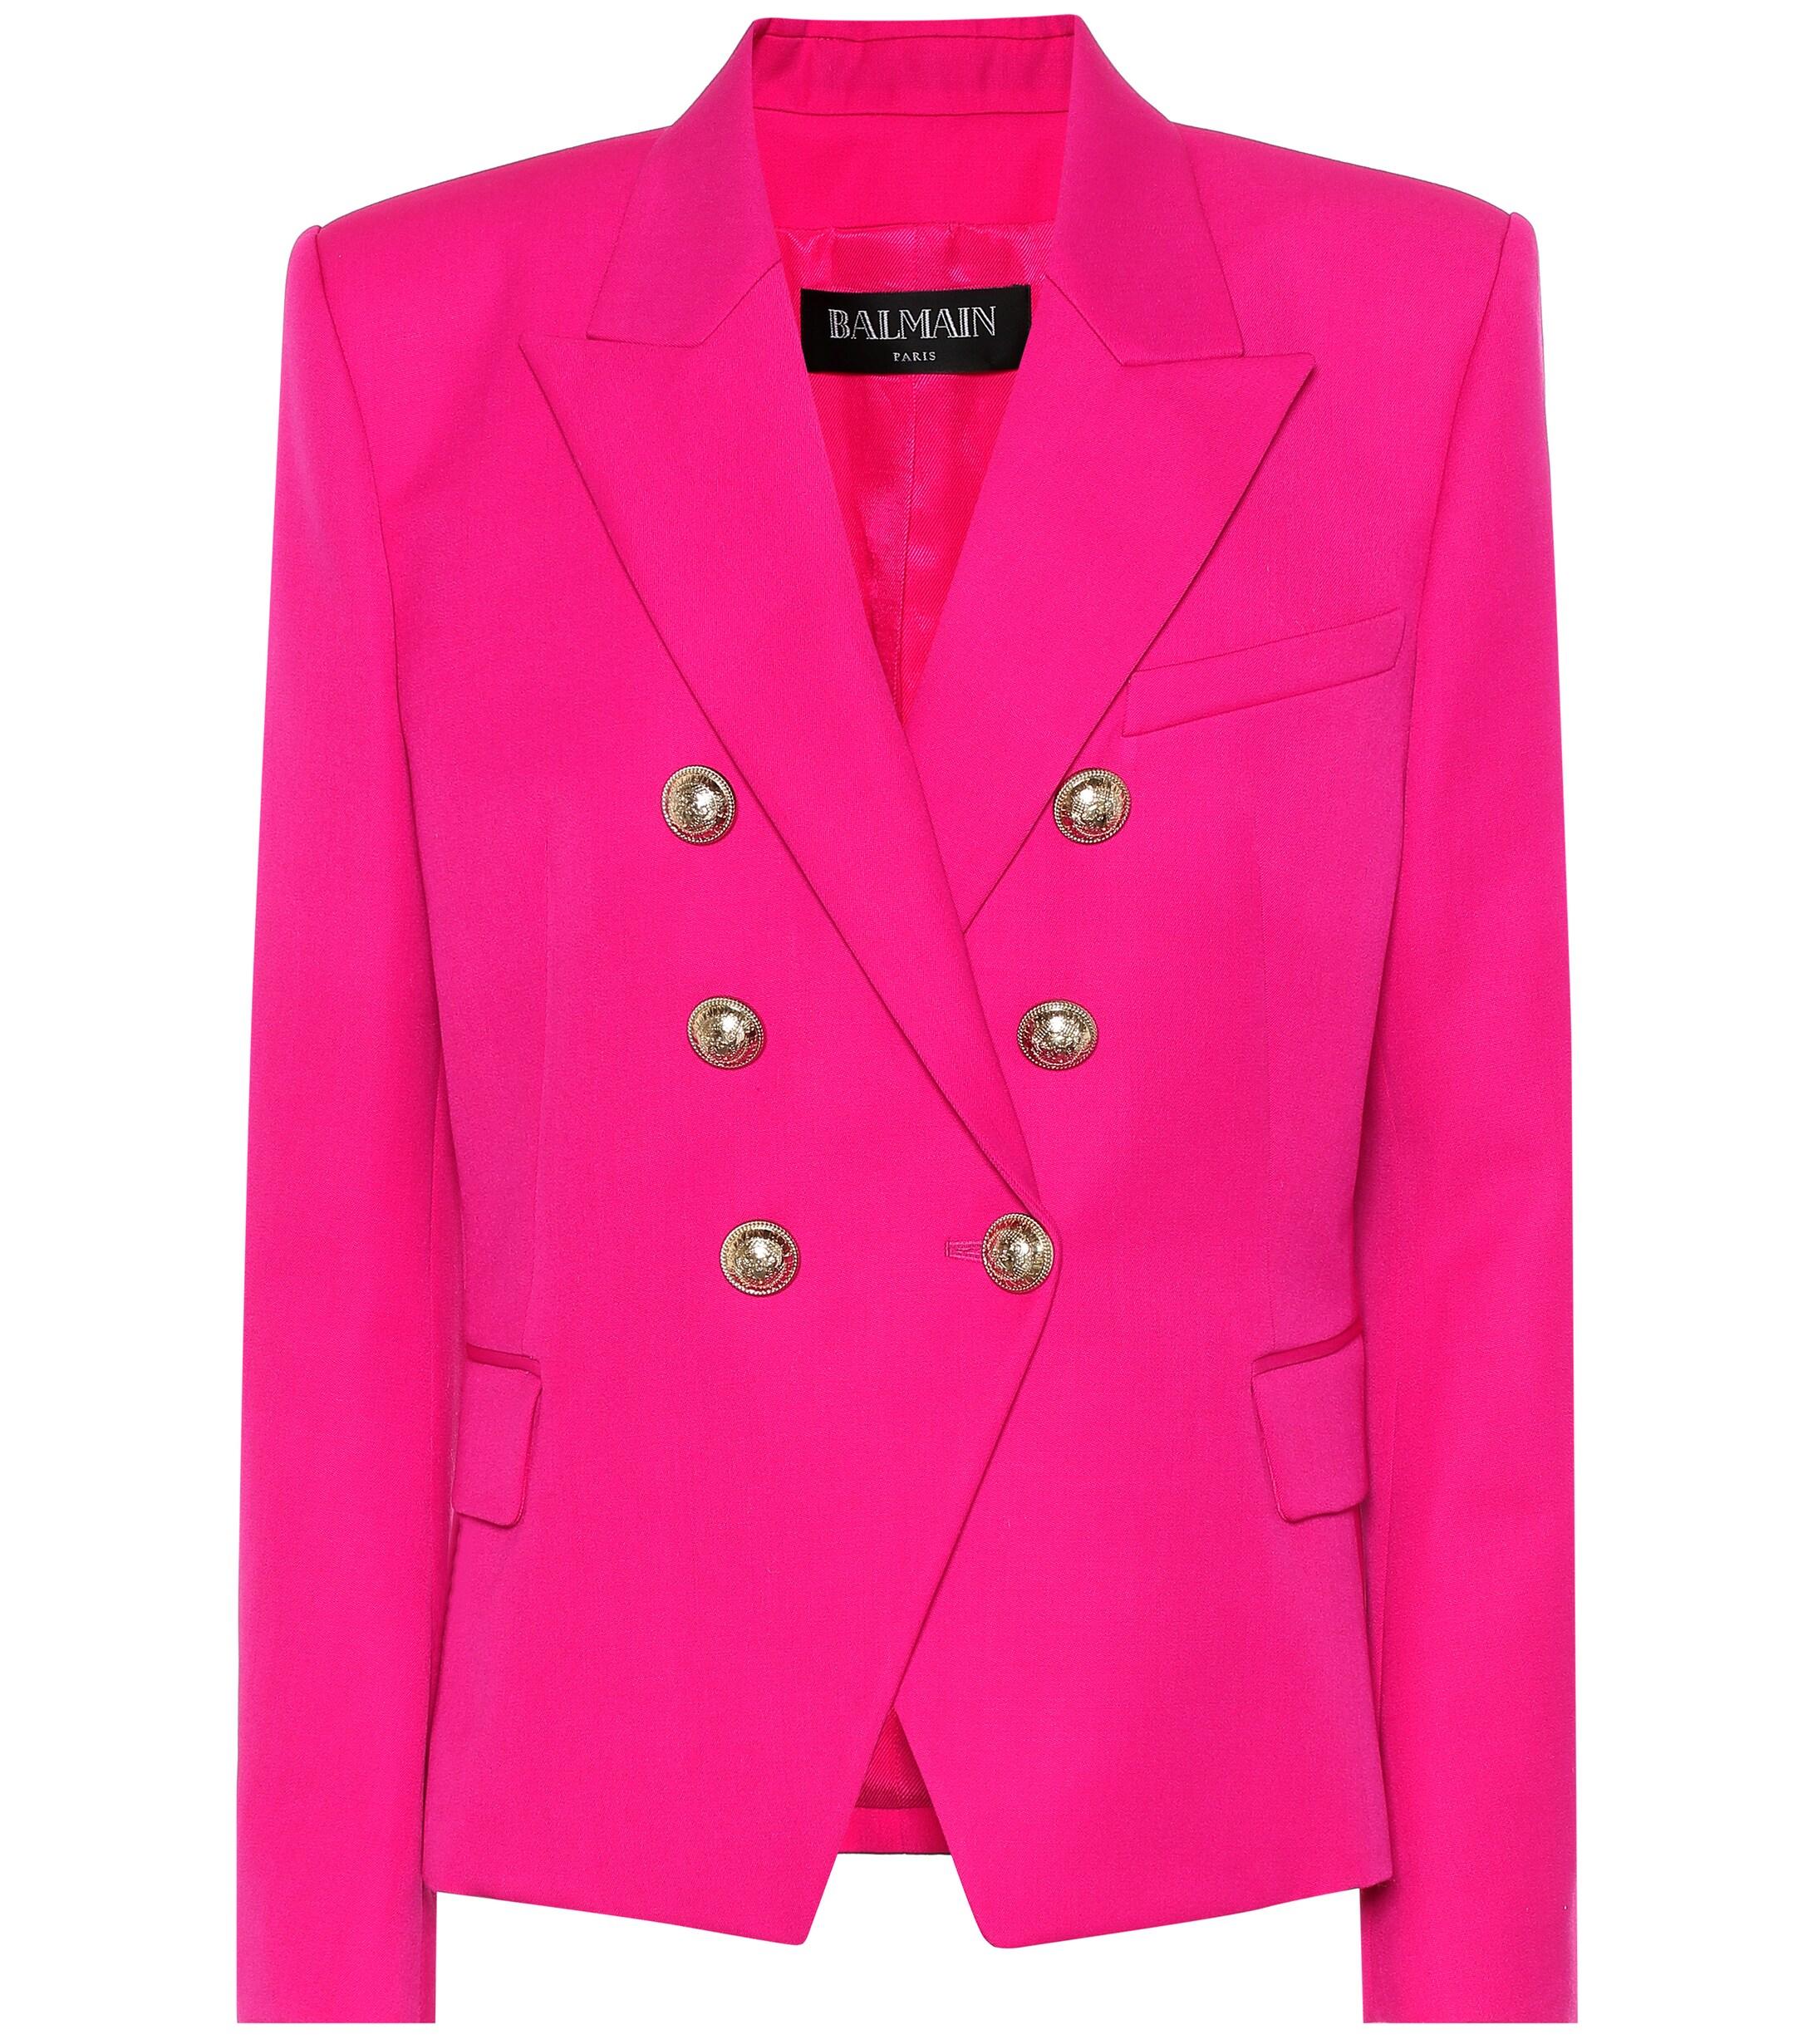 Balmain Wool Blazer in Pink - Lyst